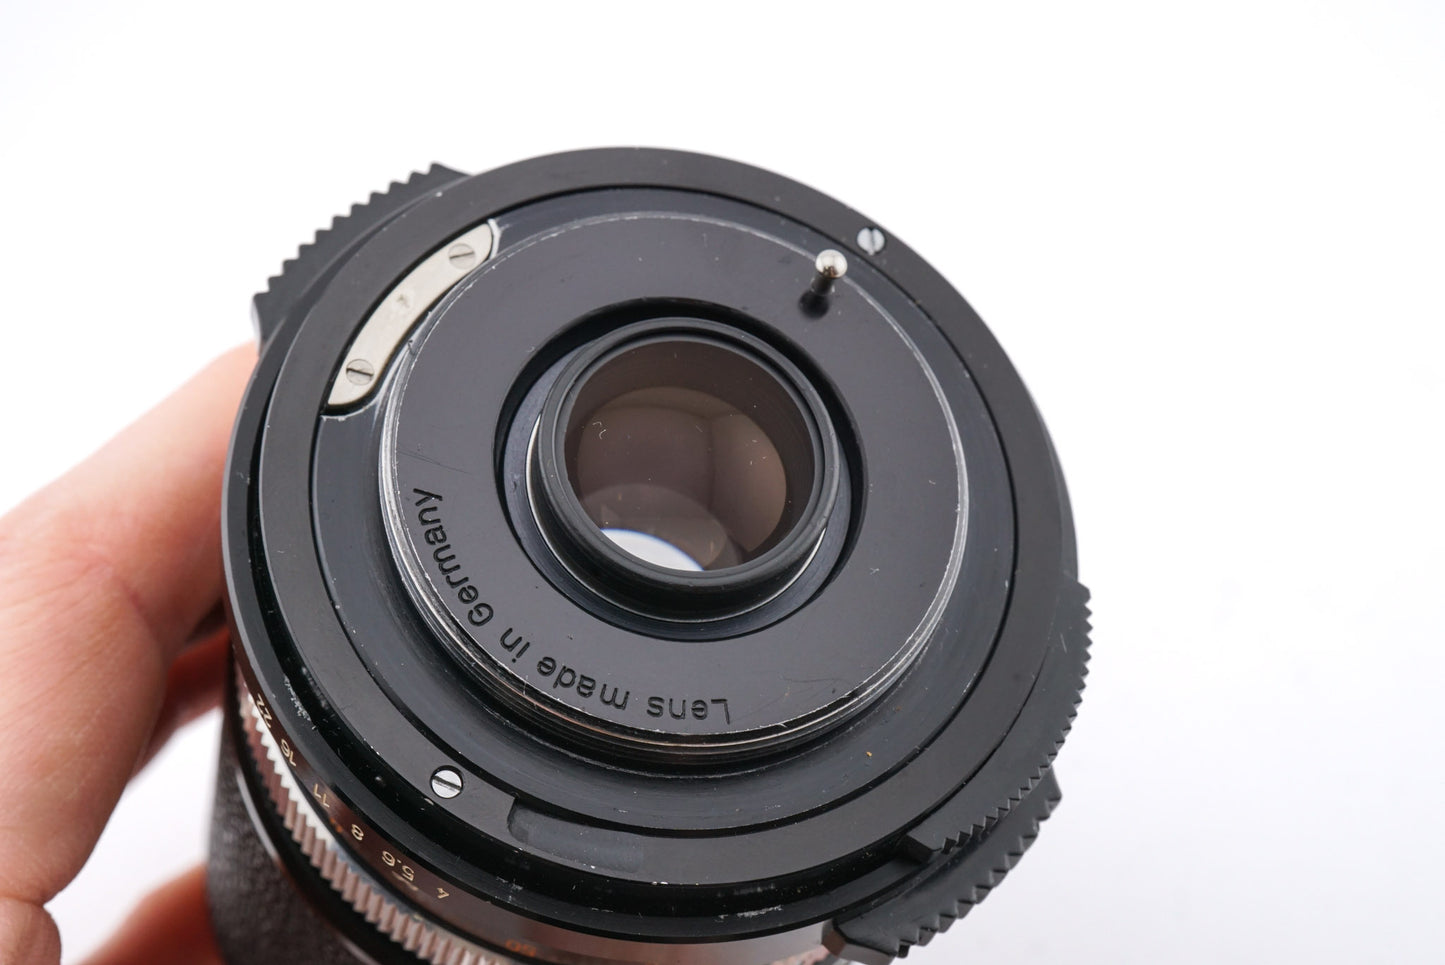 Carl Zeiss 135mm f4 Super-Dynarex